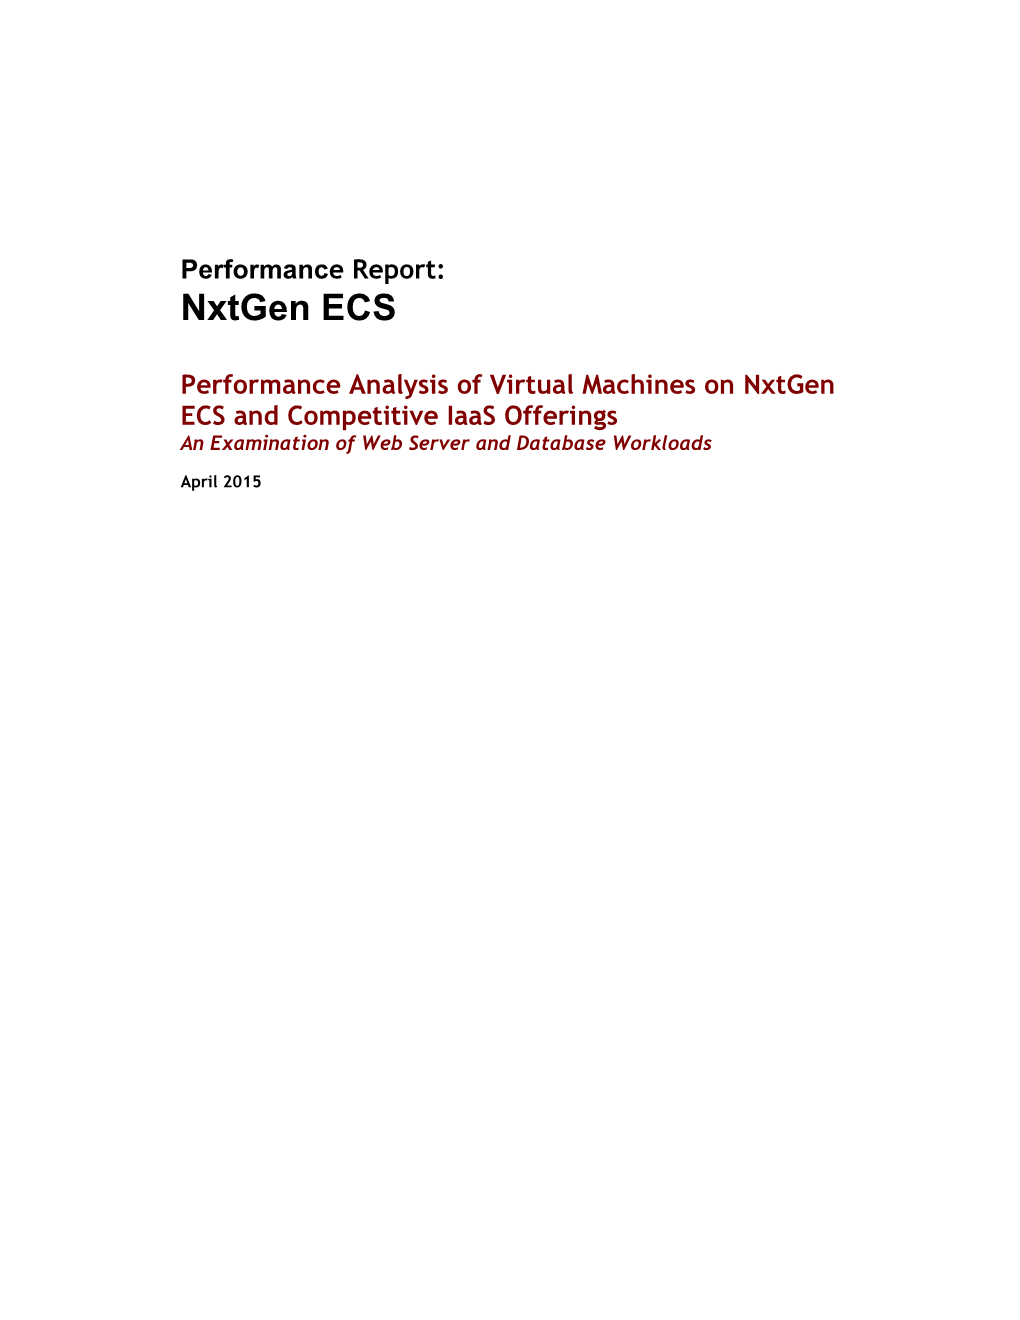 Performance Report: Nxtgen ECS